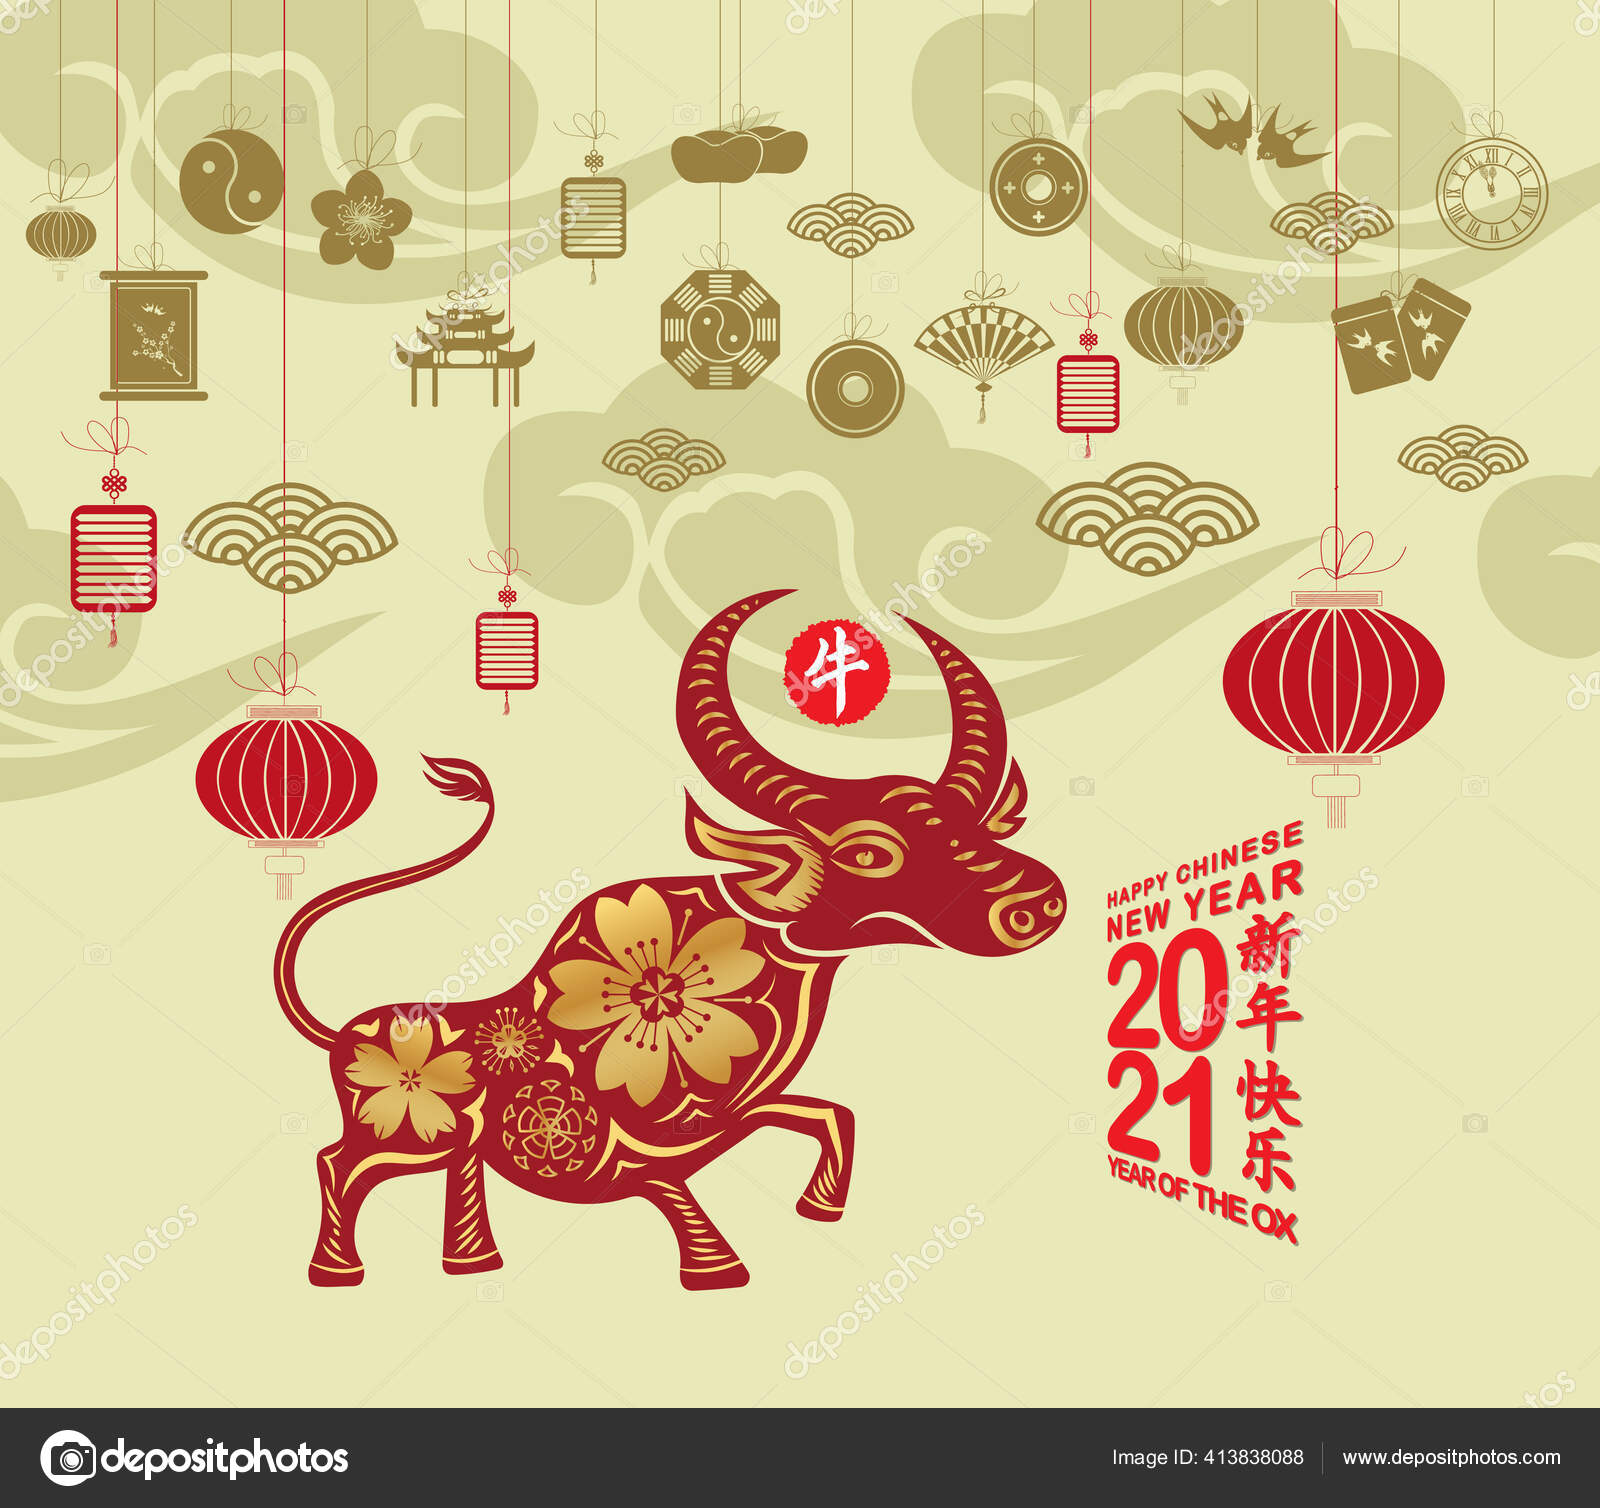 depositphotos_413838088-stock-illustration-oriental-happy-chinese-new-year